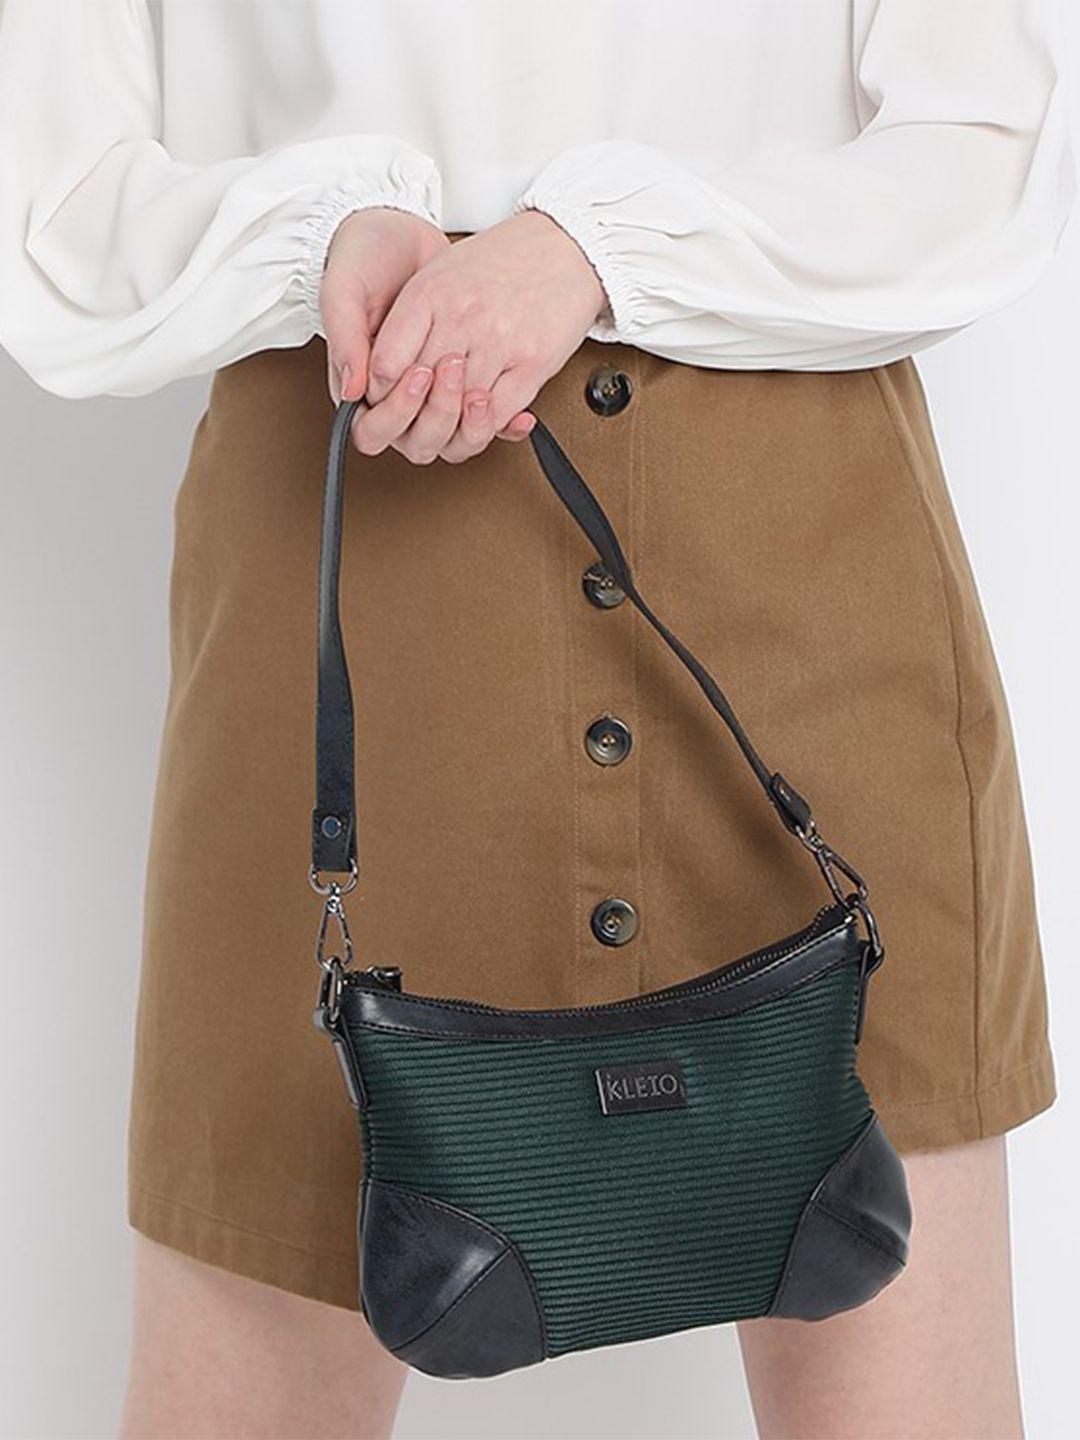 kleio fabric lightweight dual handle sling bag